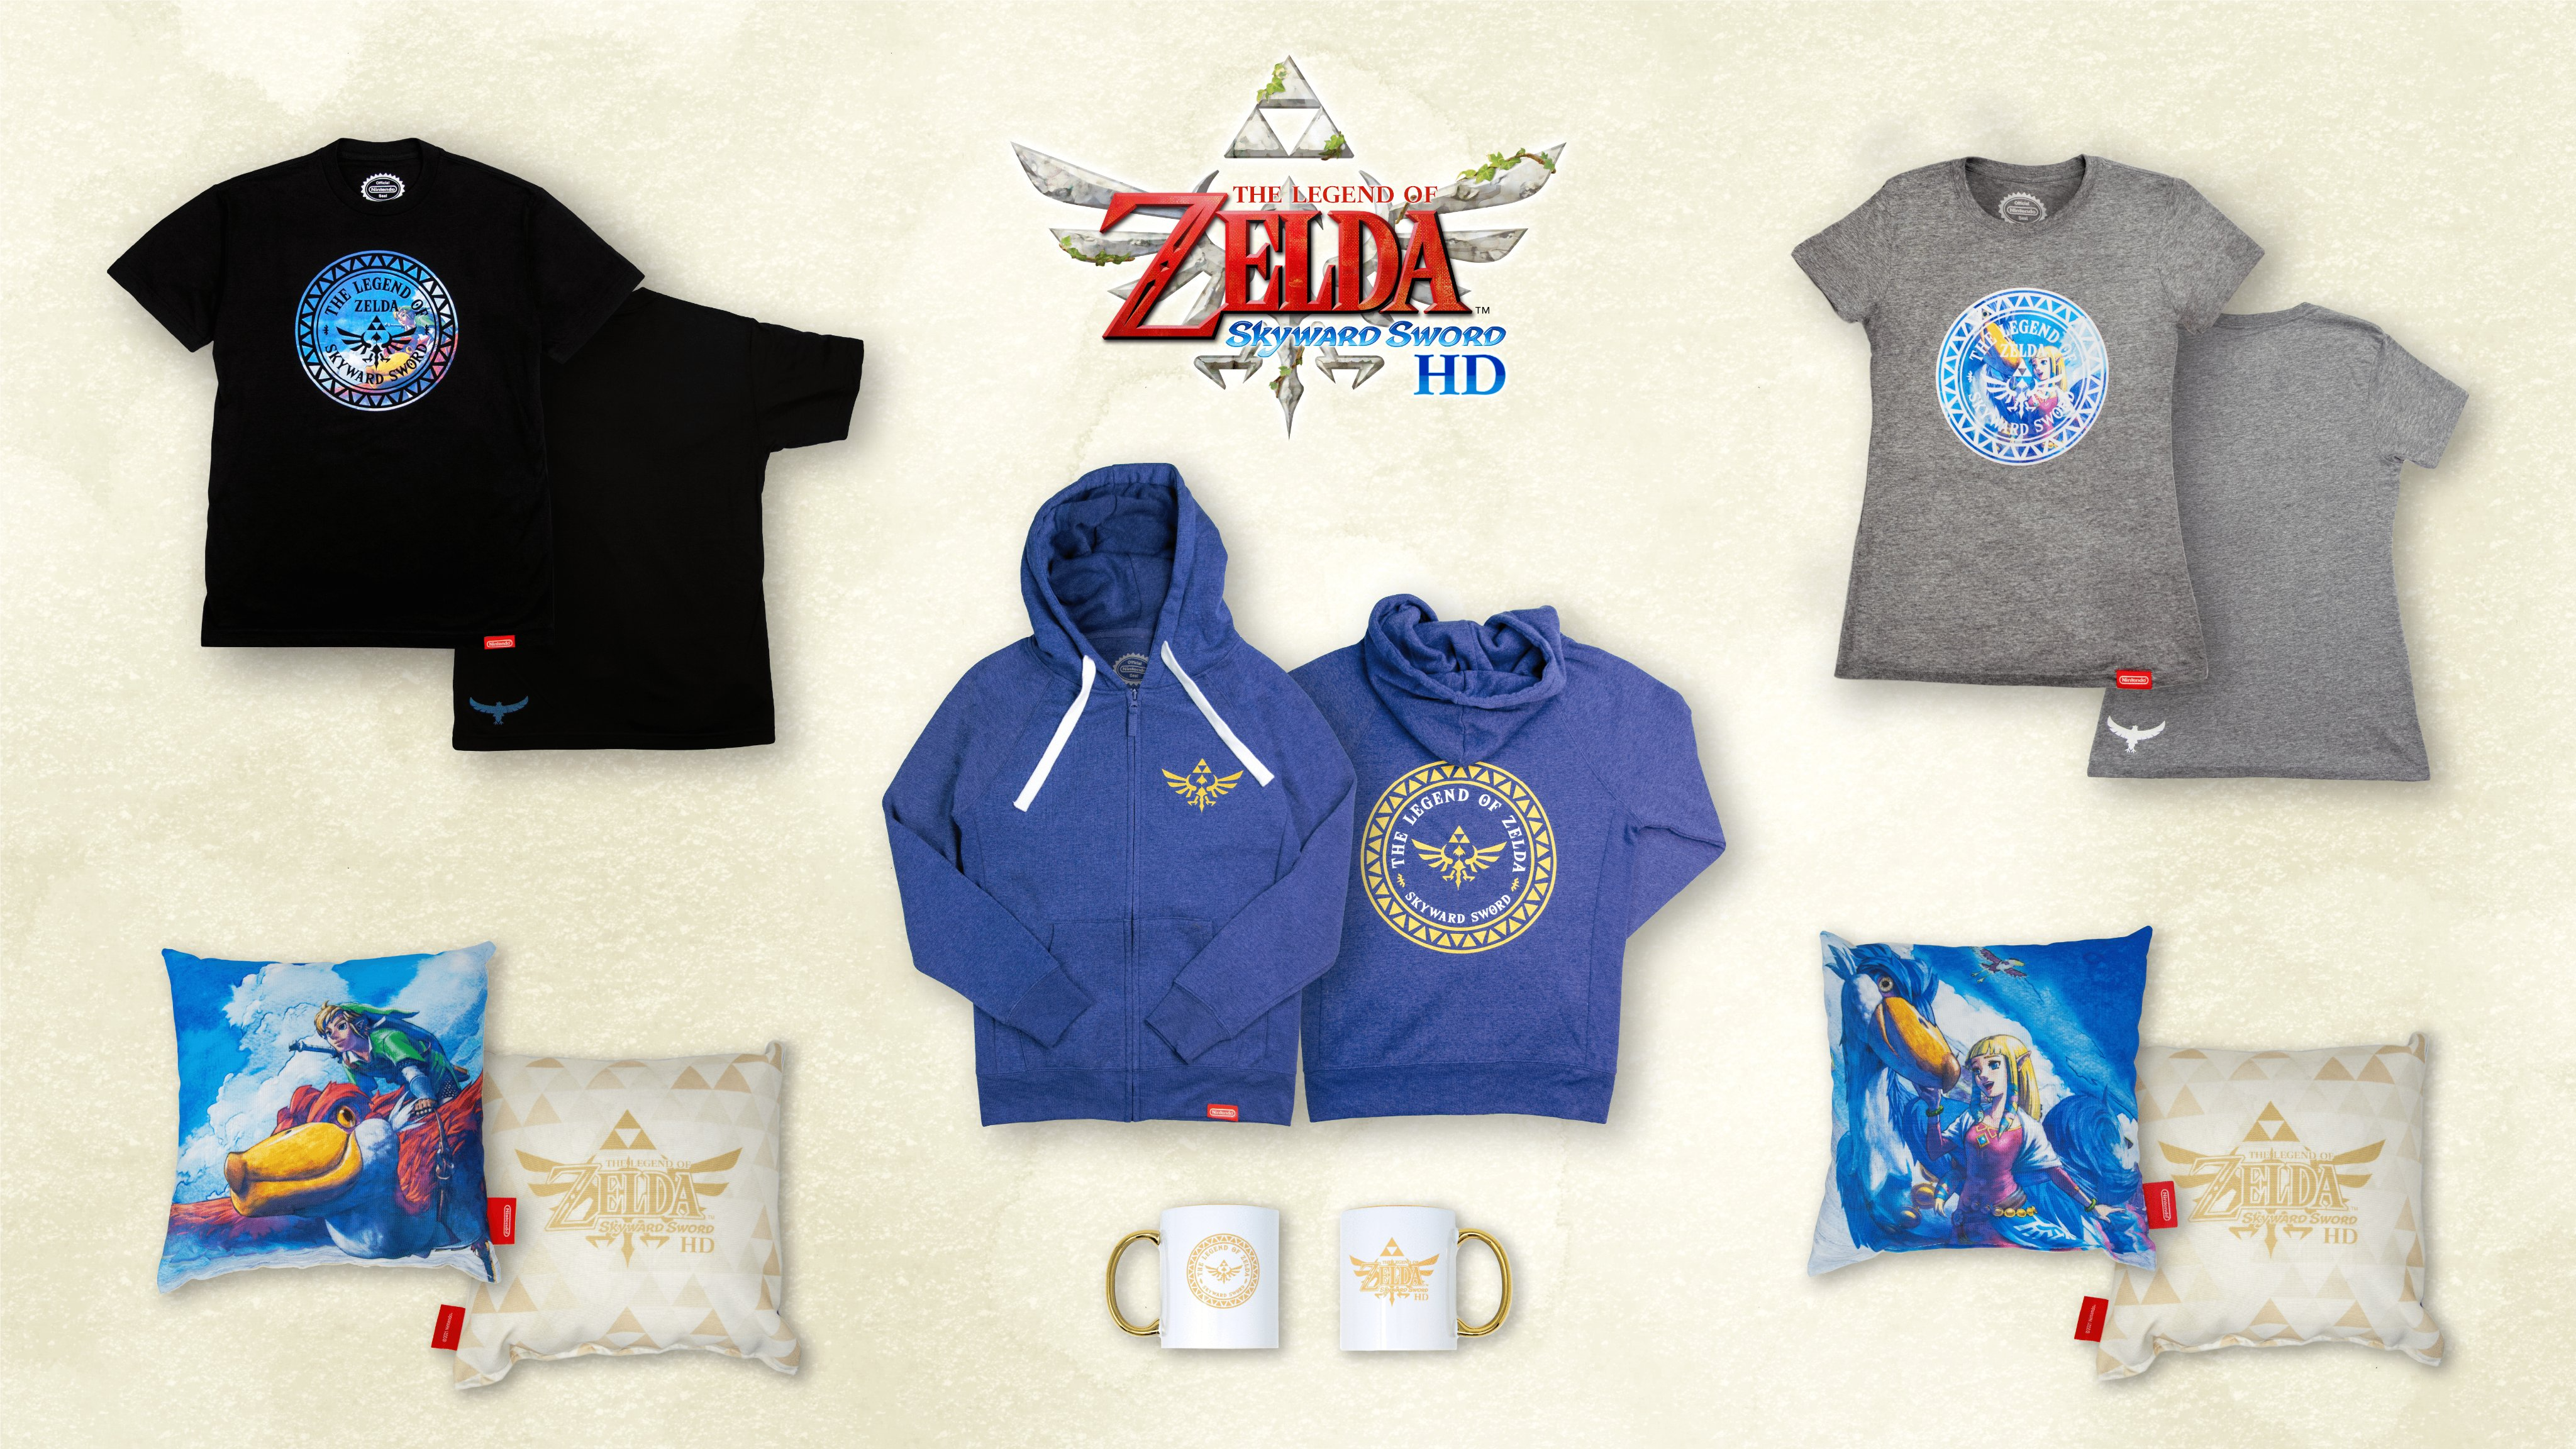 The Legend of Zelda Apparel — Nintendo Online Store South Africa